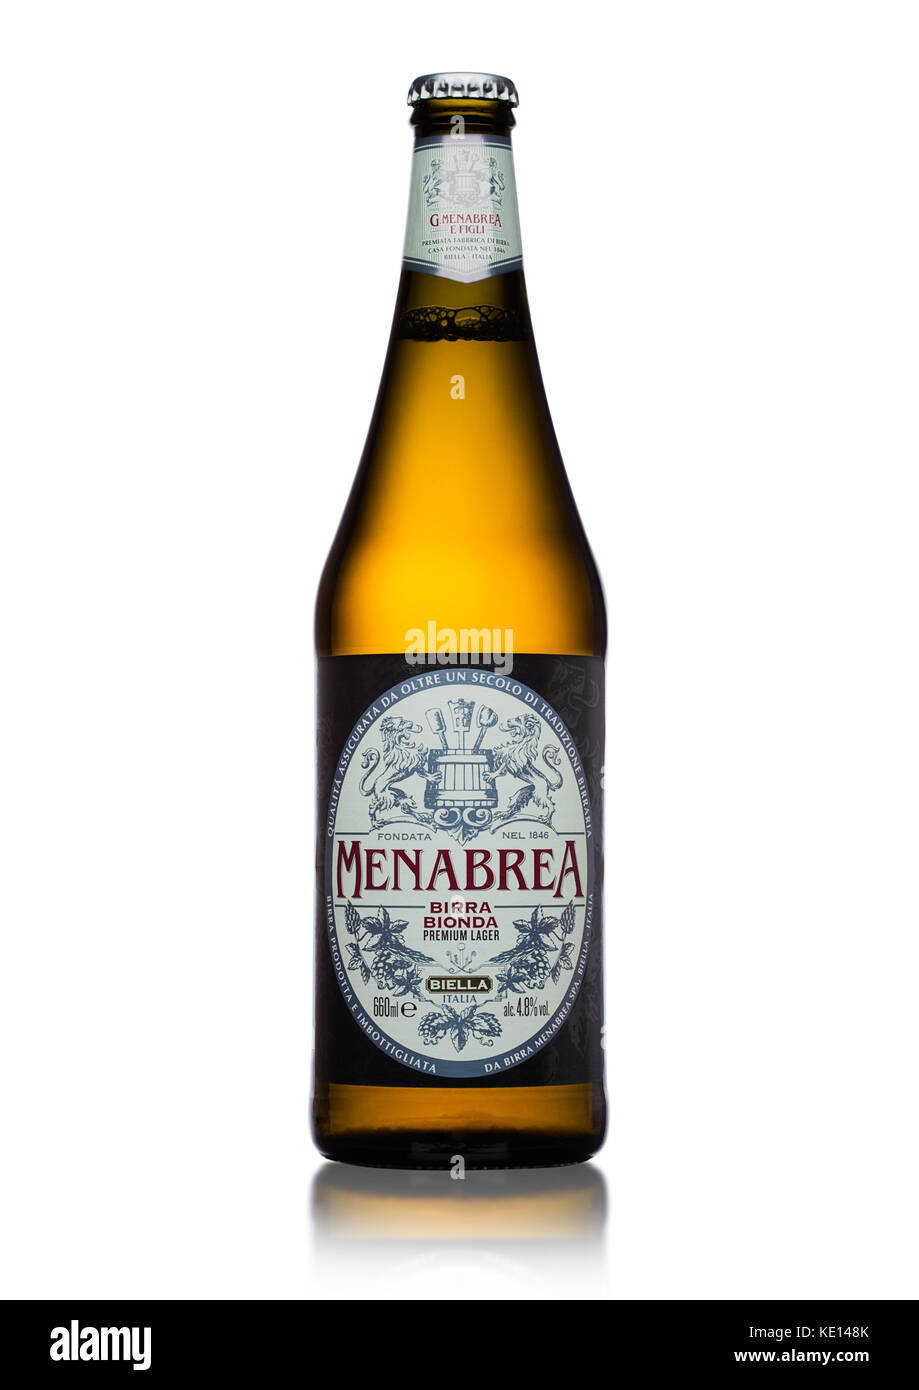 Rodet FALSK ønske LONDON, UK - MAY 15, 2017: Bottle of Menabrea birra blonda premium lager  beer on white background. Italian beer Stock Photo - Alamy